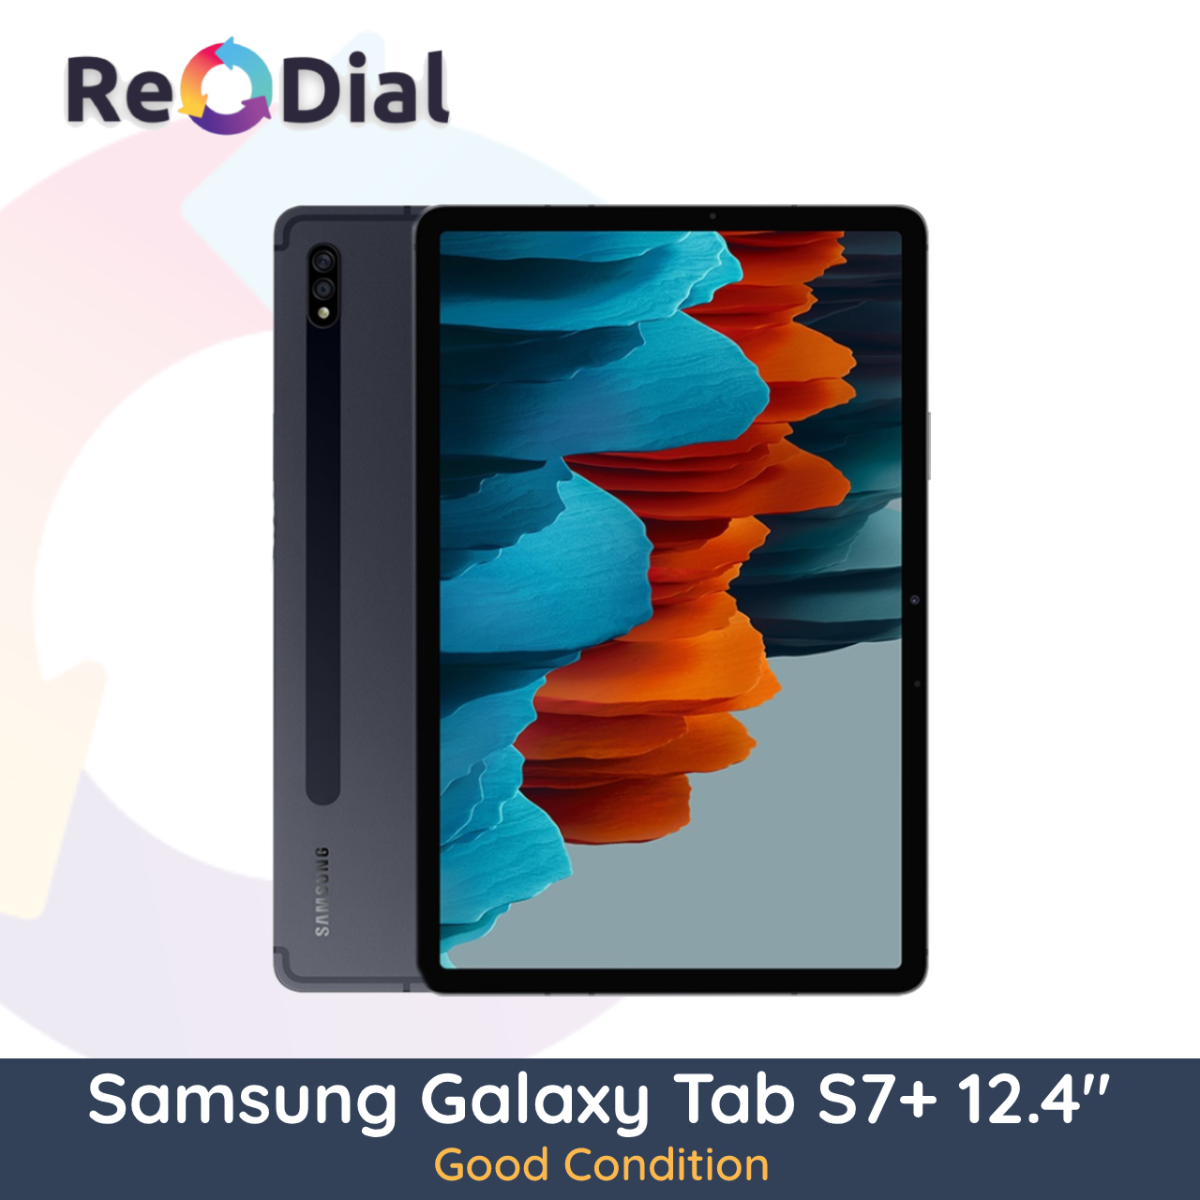 Samsung Galaxy Tab S7+ 12.4" (T970 / 2020) WiFi - Good Condition